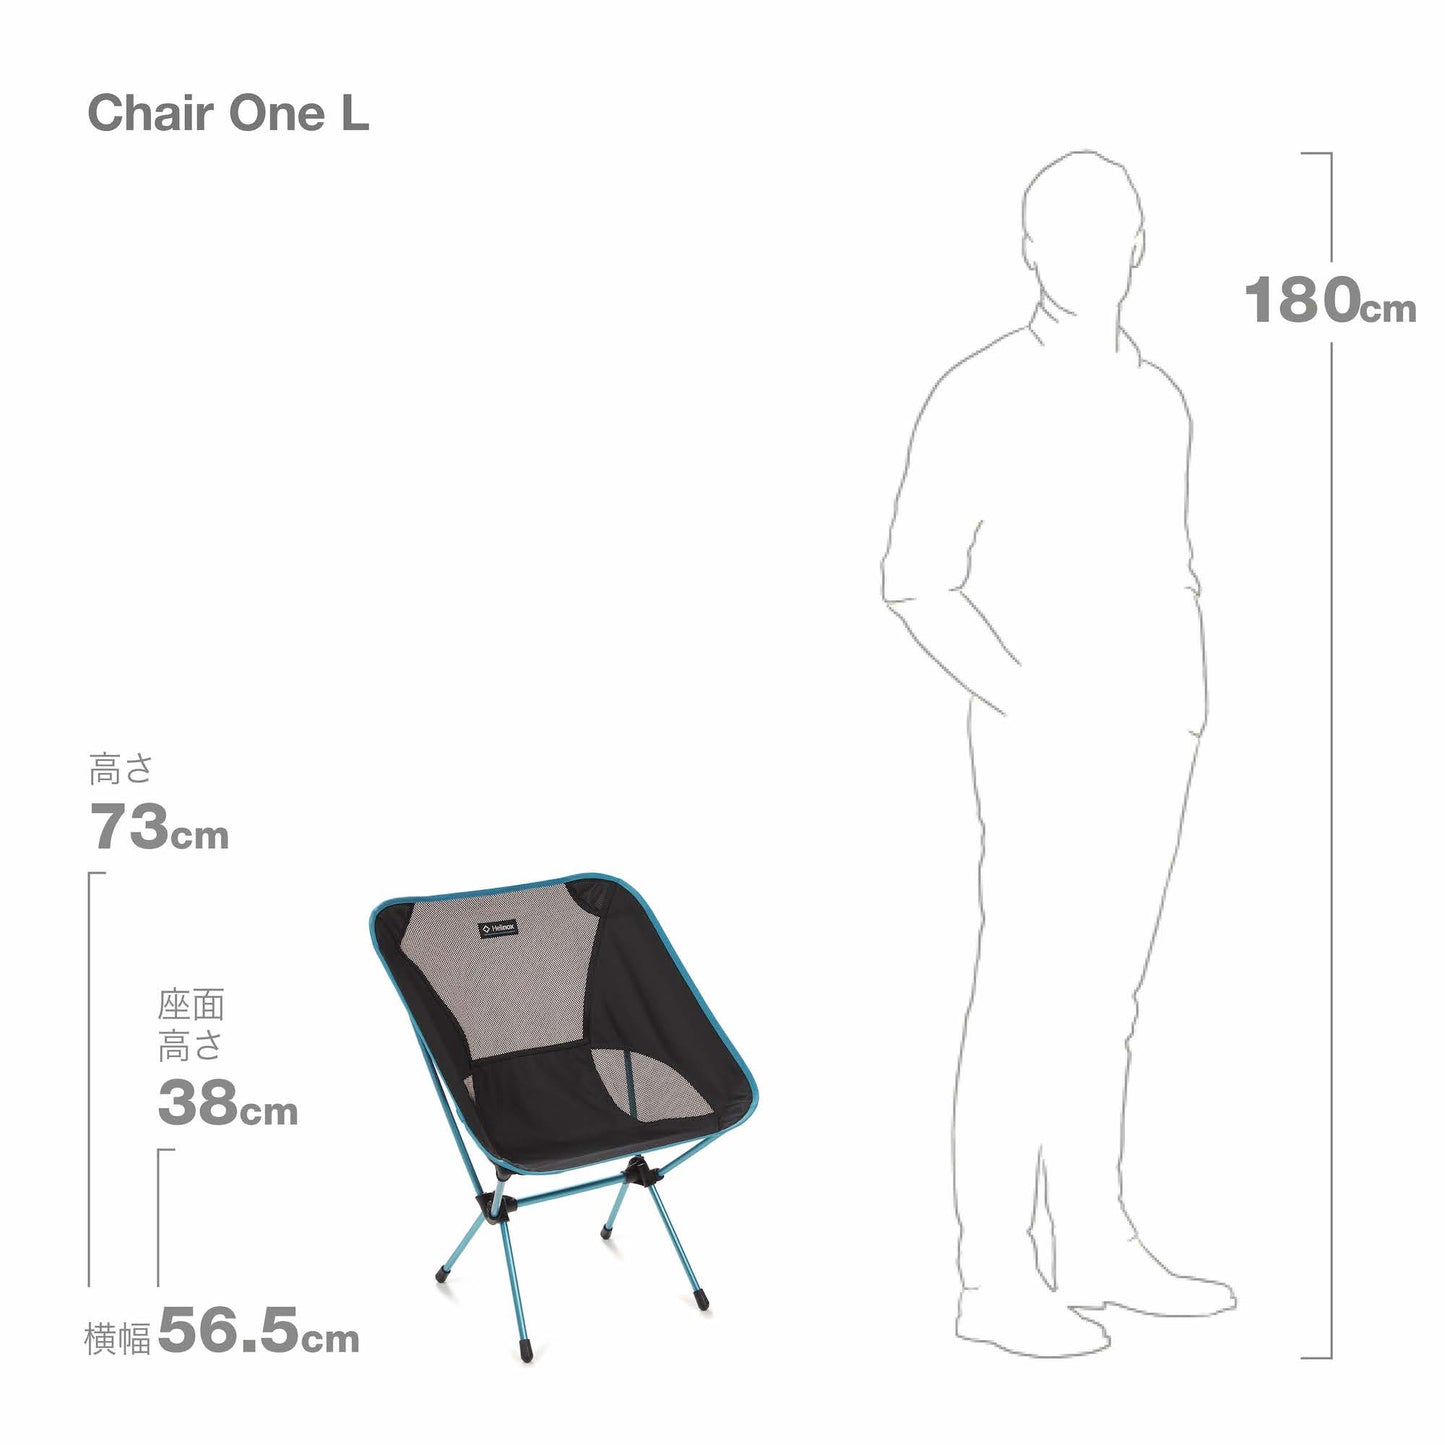 Chair One L - Black